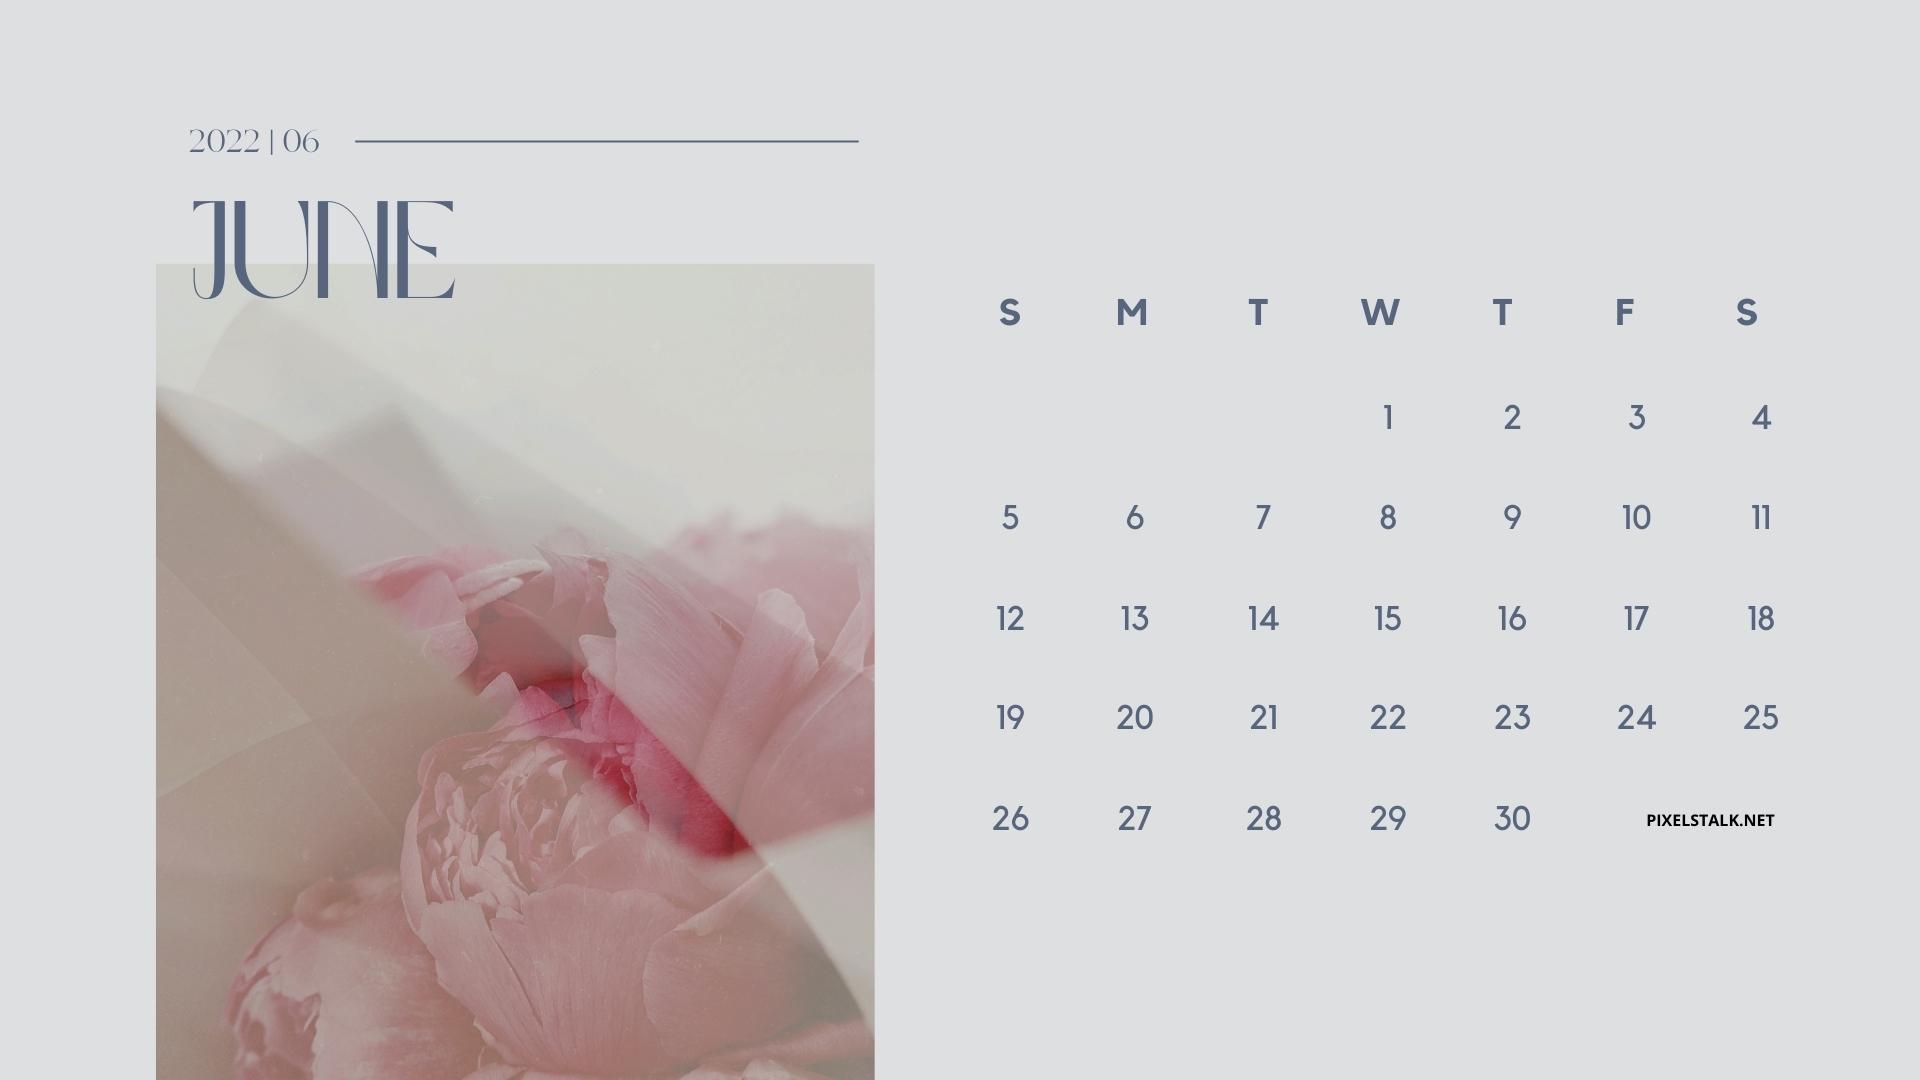 July 2022 wallpapers  55 FREE  beautiful desktop  phone calendars